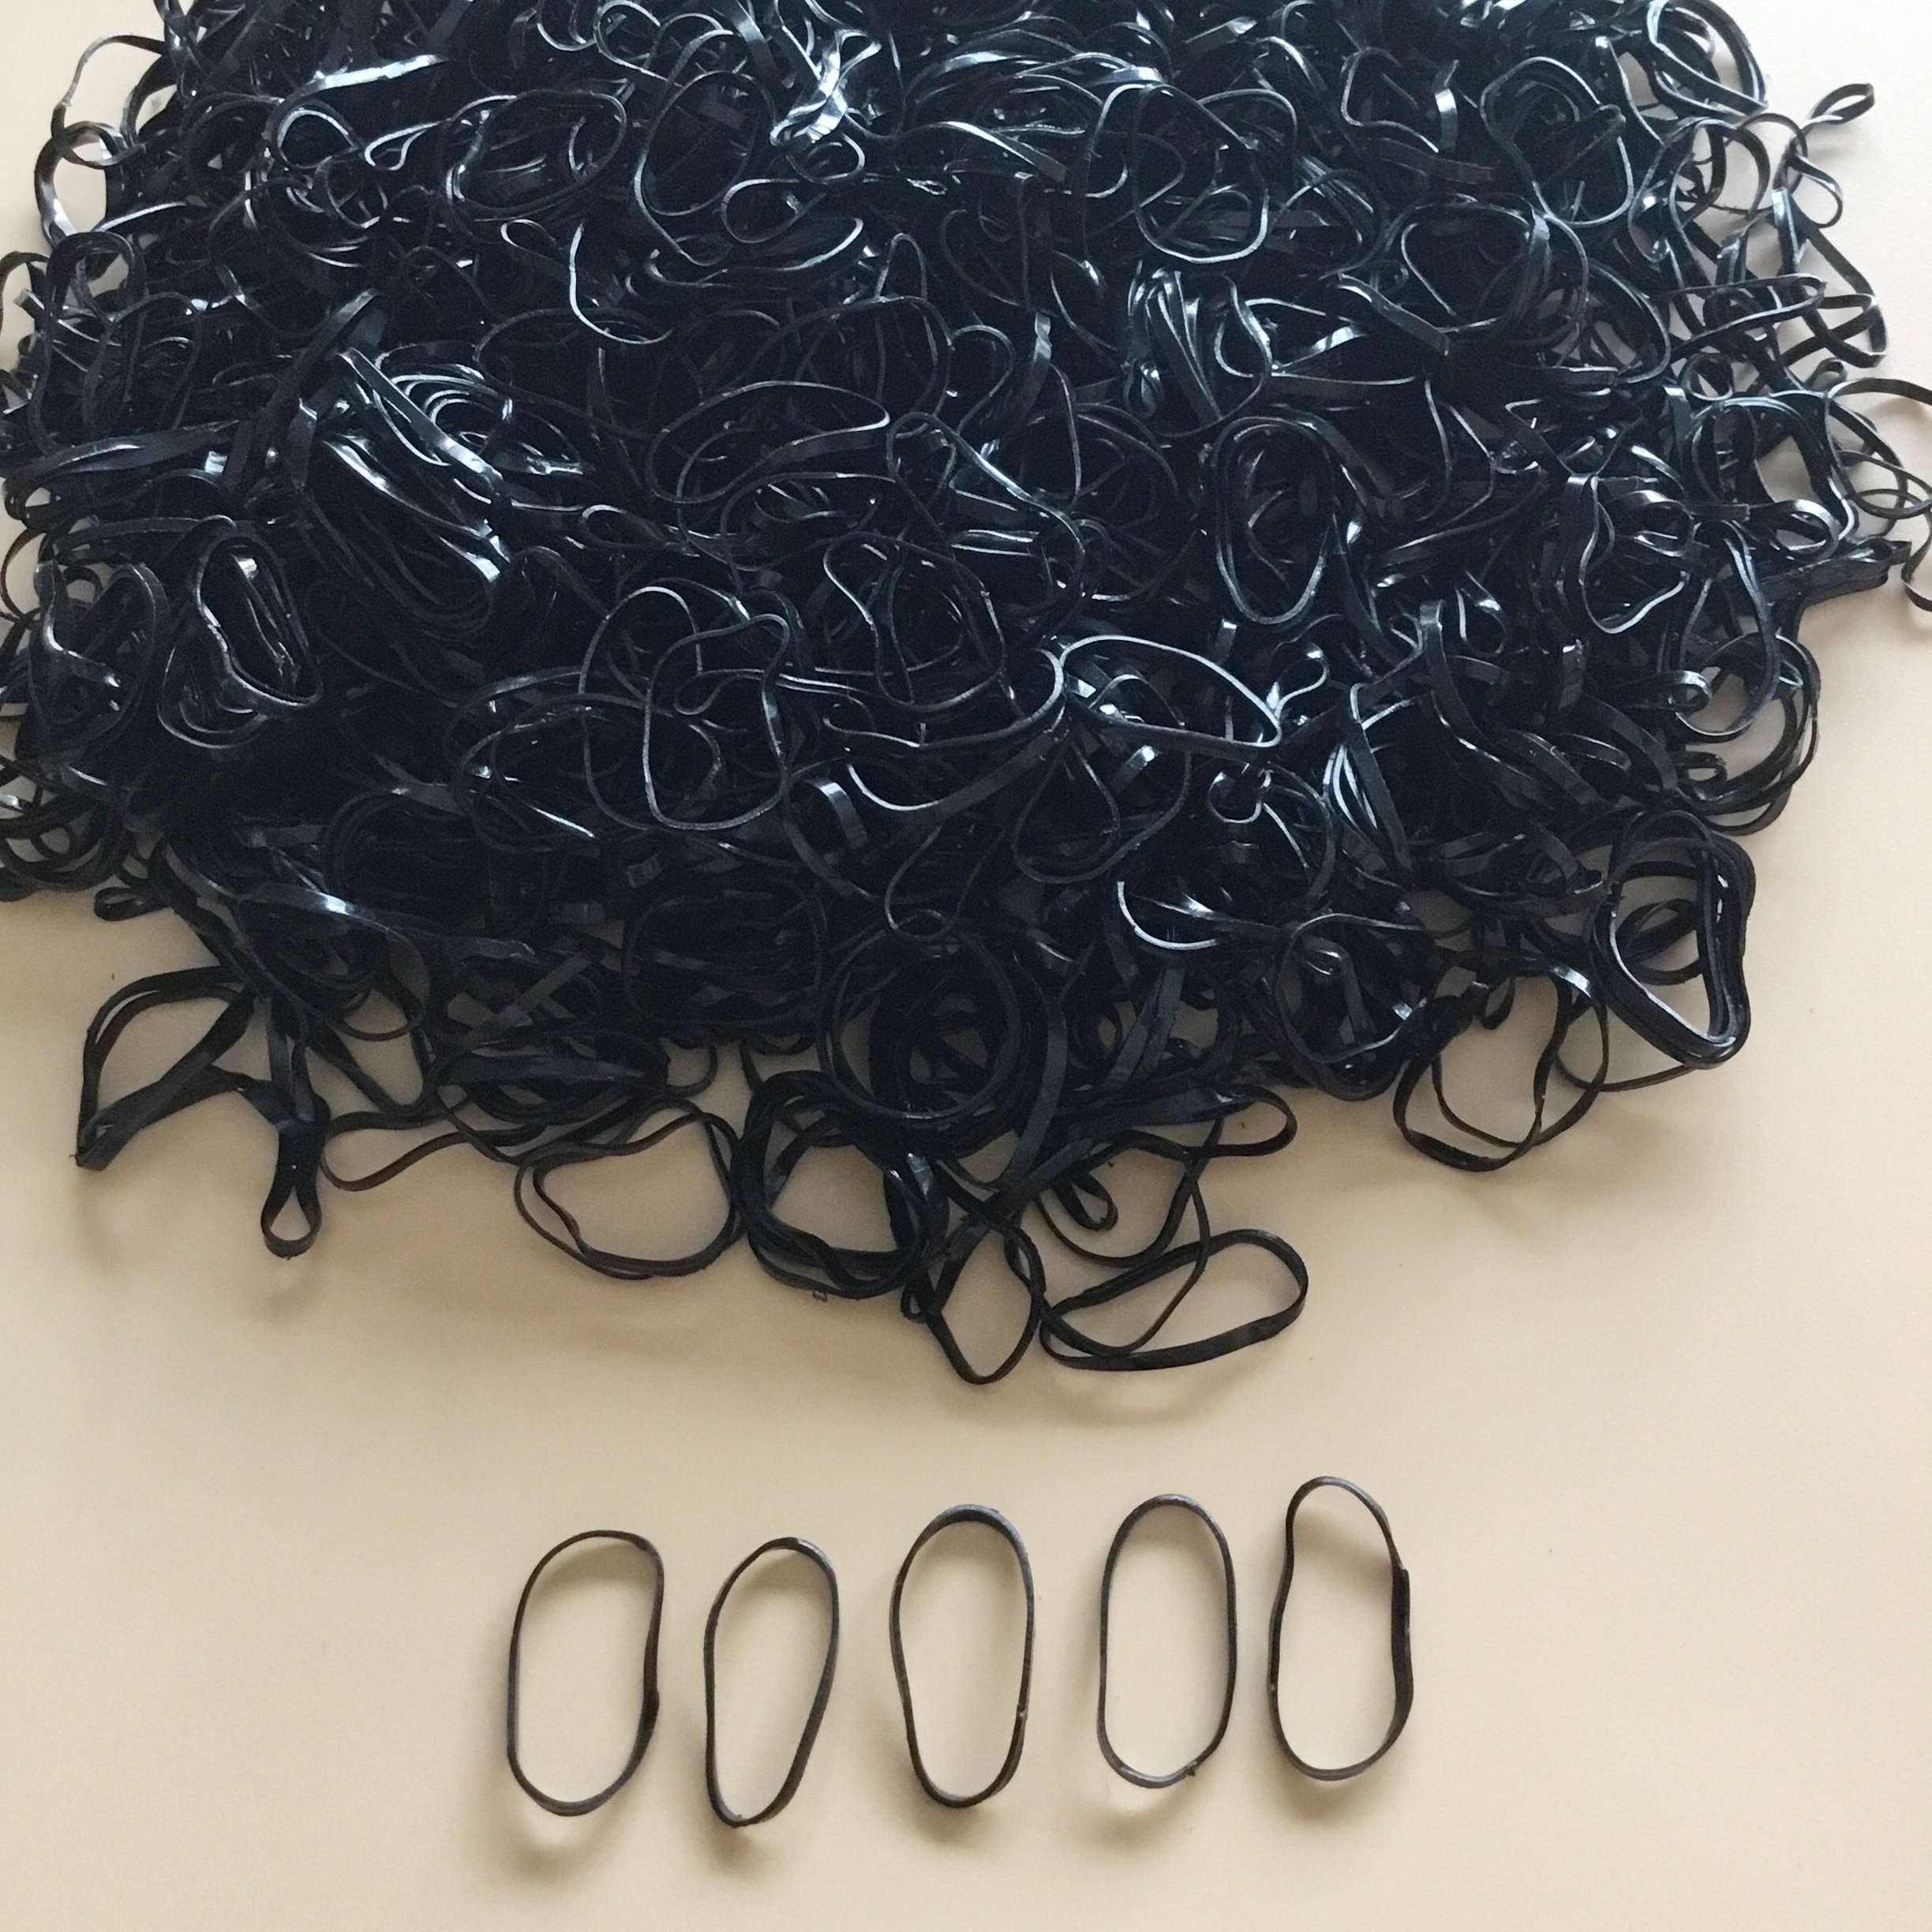 1000 Pcs Of Mini Clear Elastic Hair Bands For Women, Boys Hair